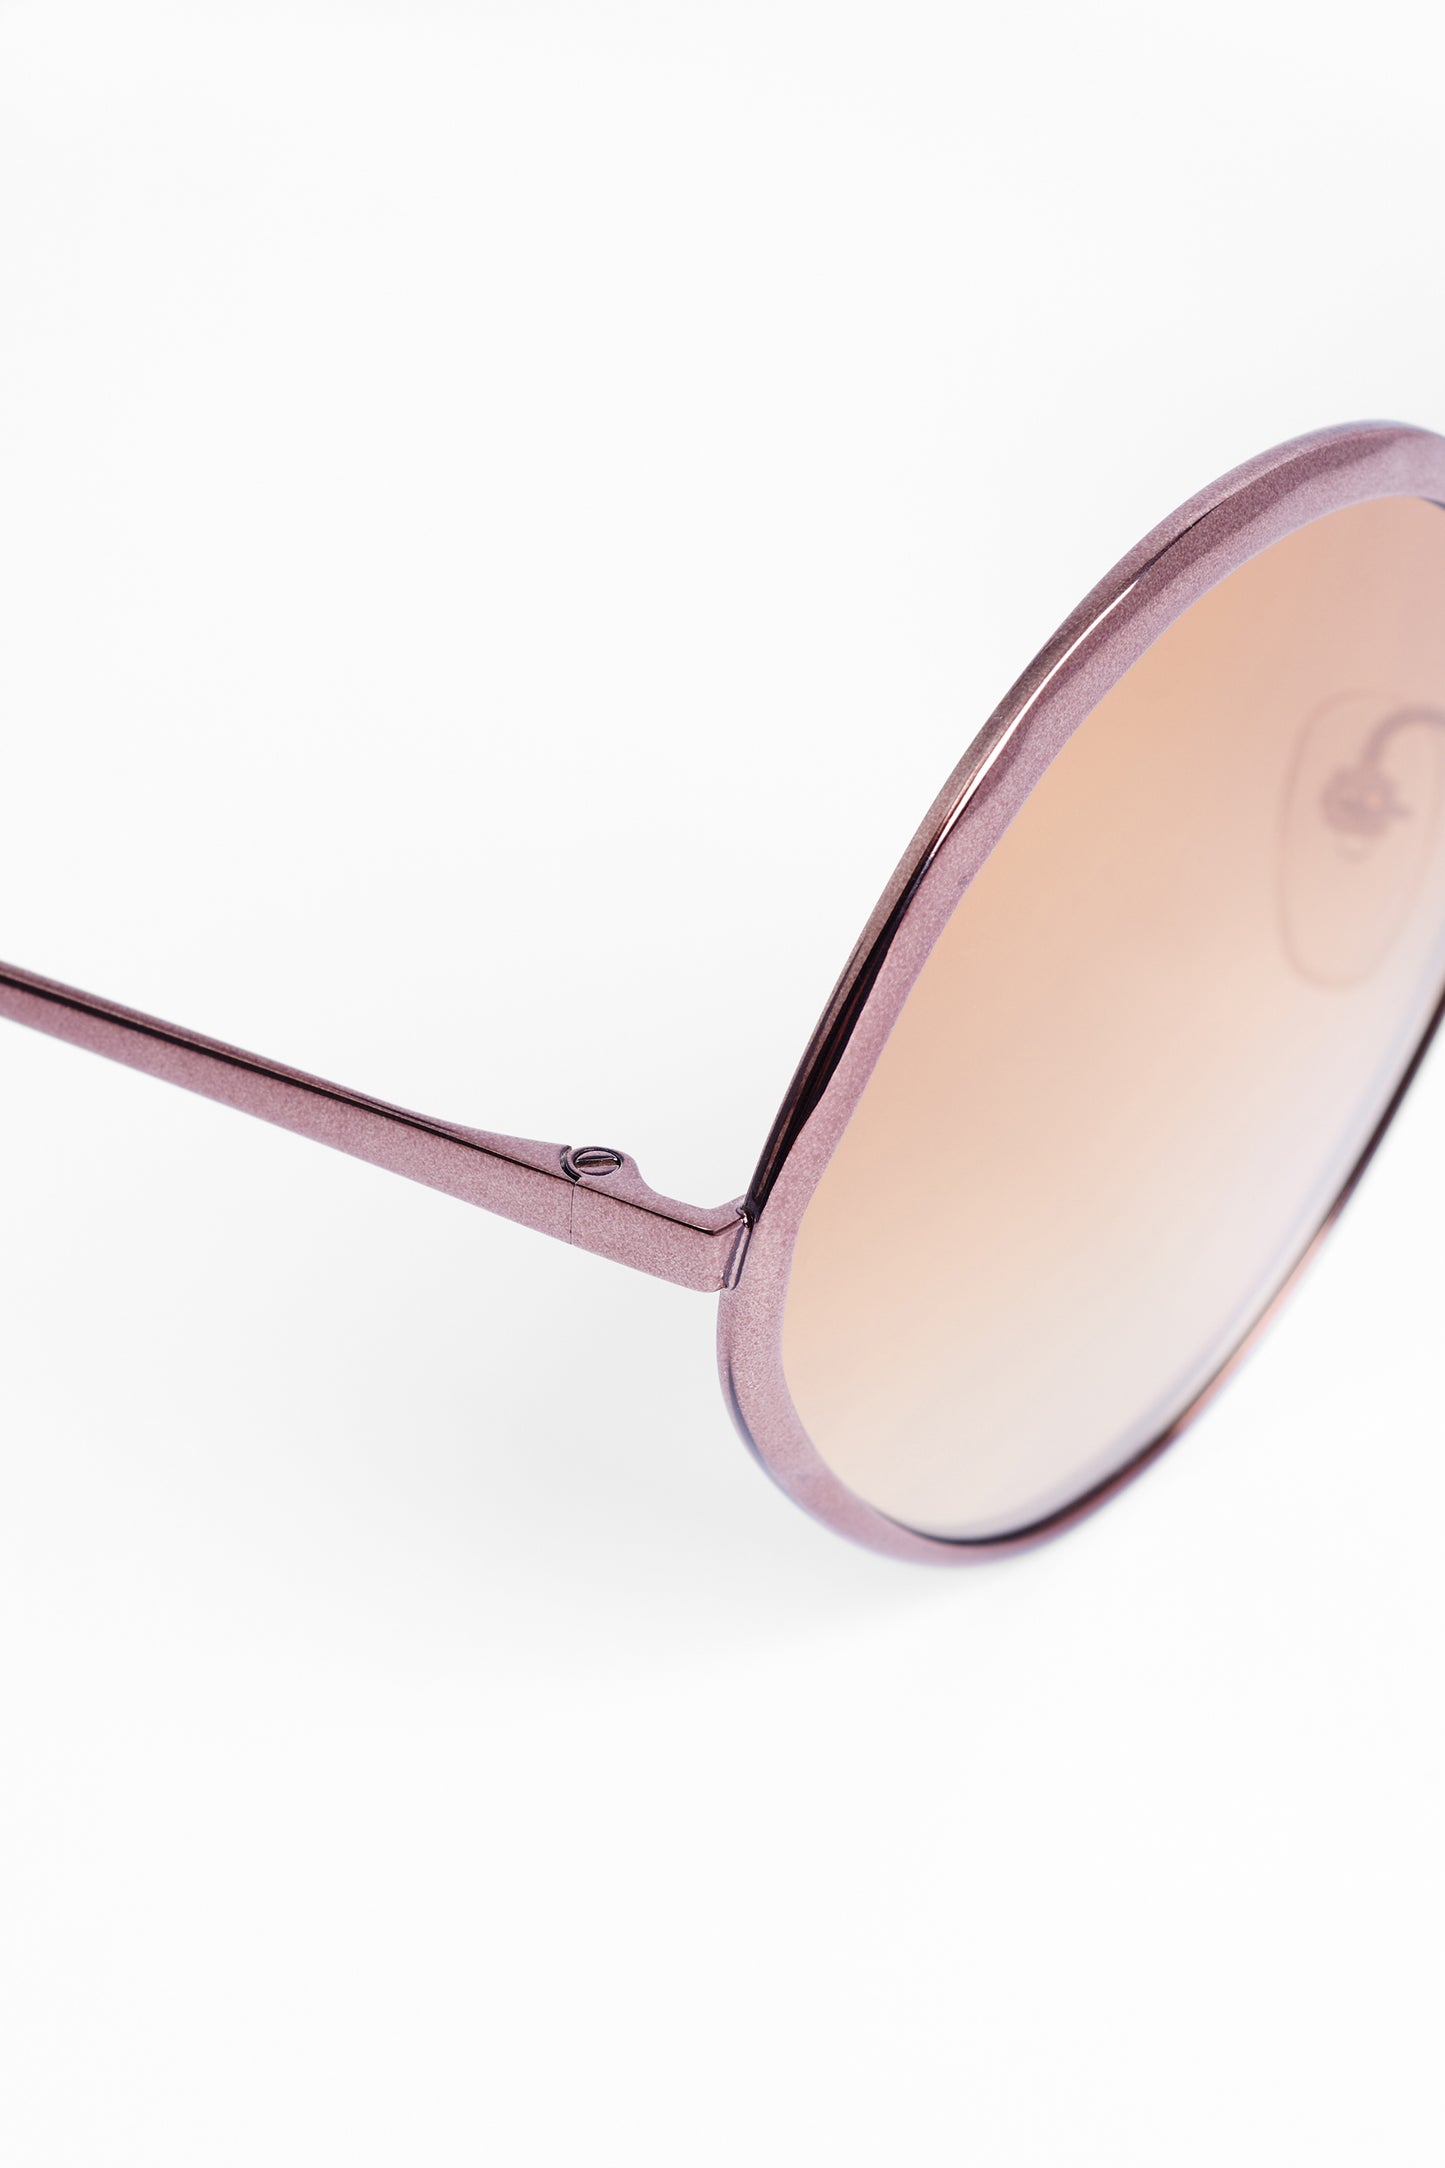 2021 Oversize Circle Rose Gold Mirror Sunglasses